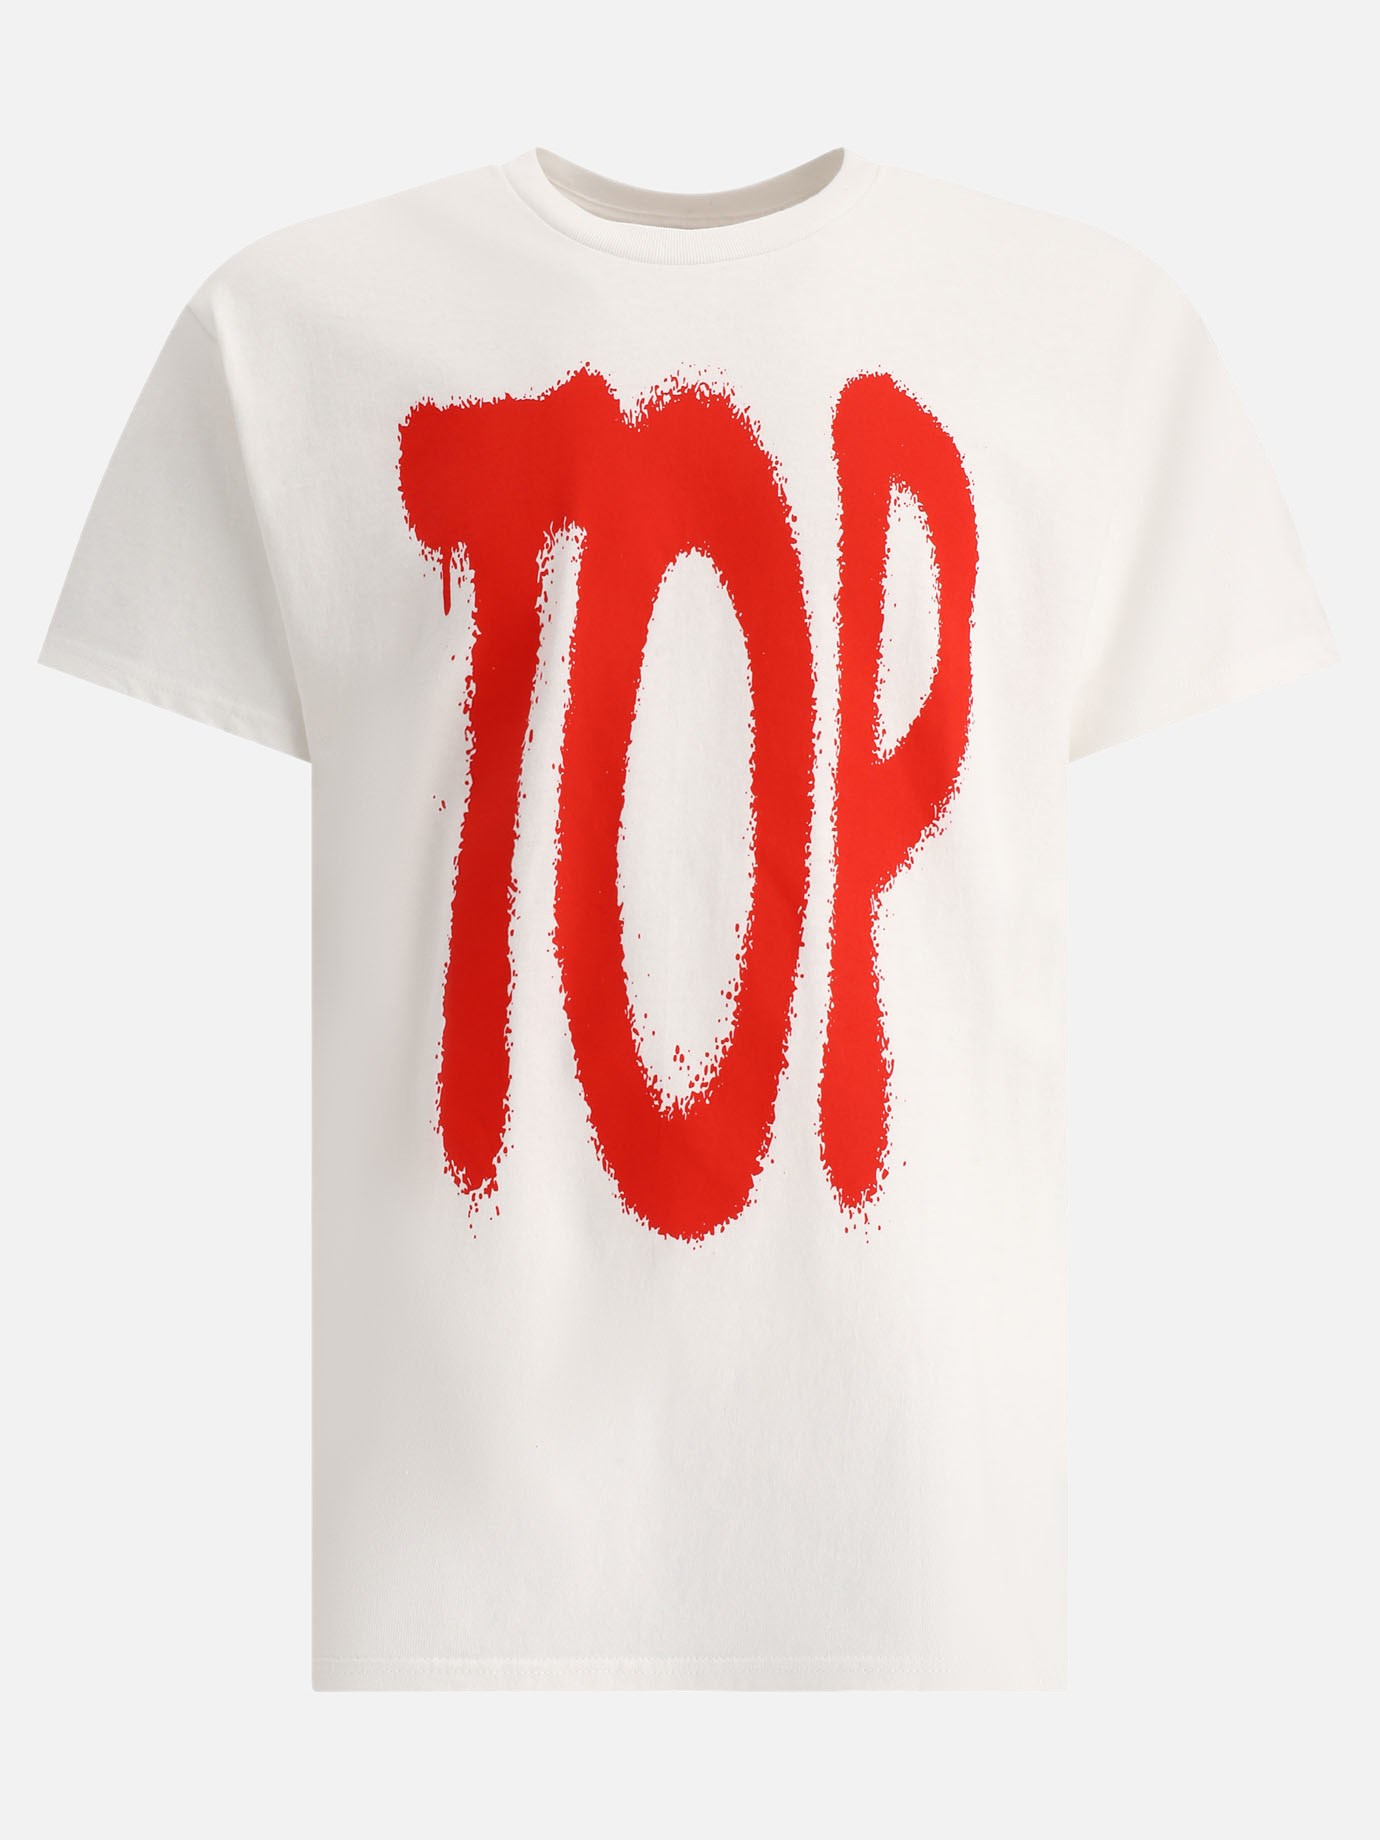 T-shirt  YoungBoy NBA x Vlone Top  by Vlone